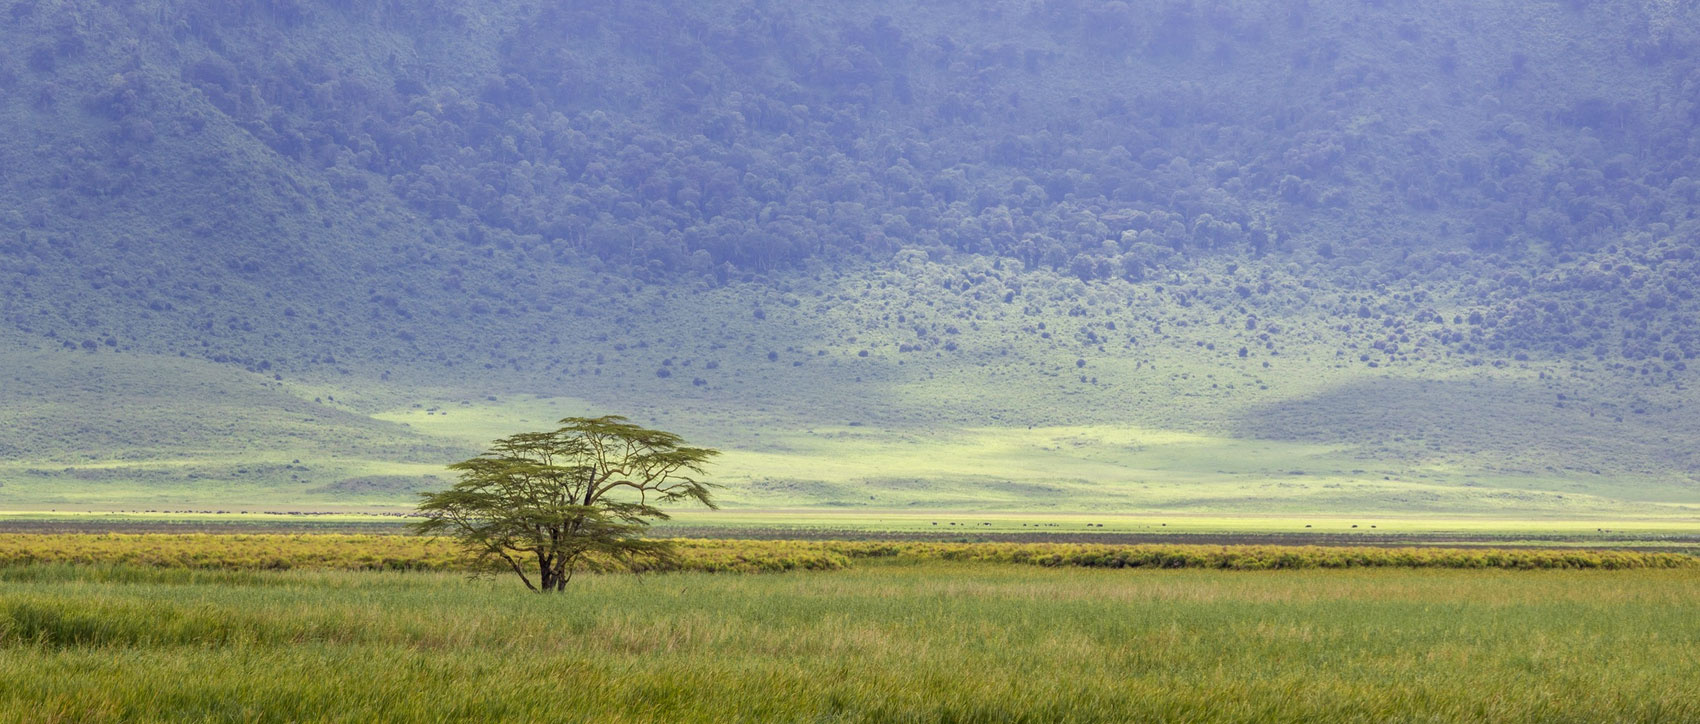 в Танзании дерево кратер Танзания